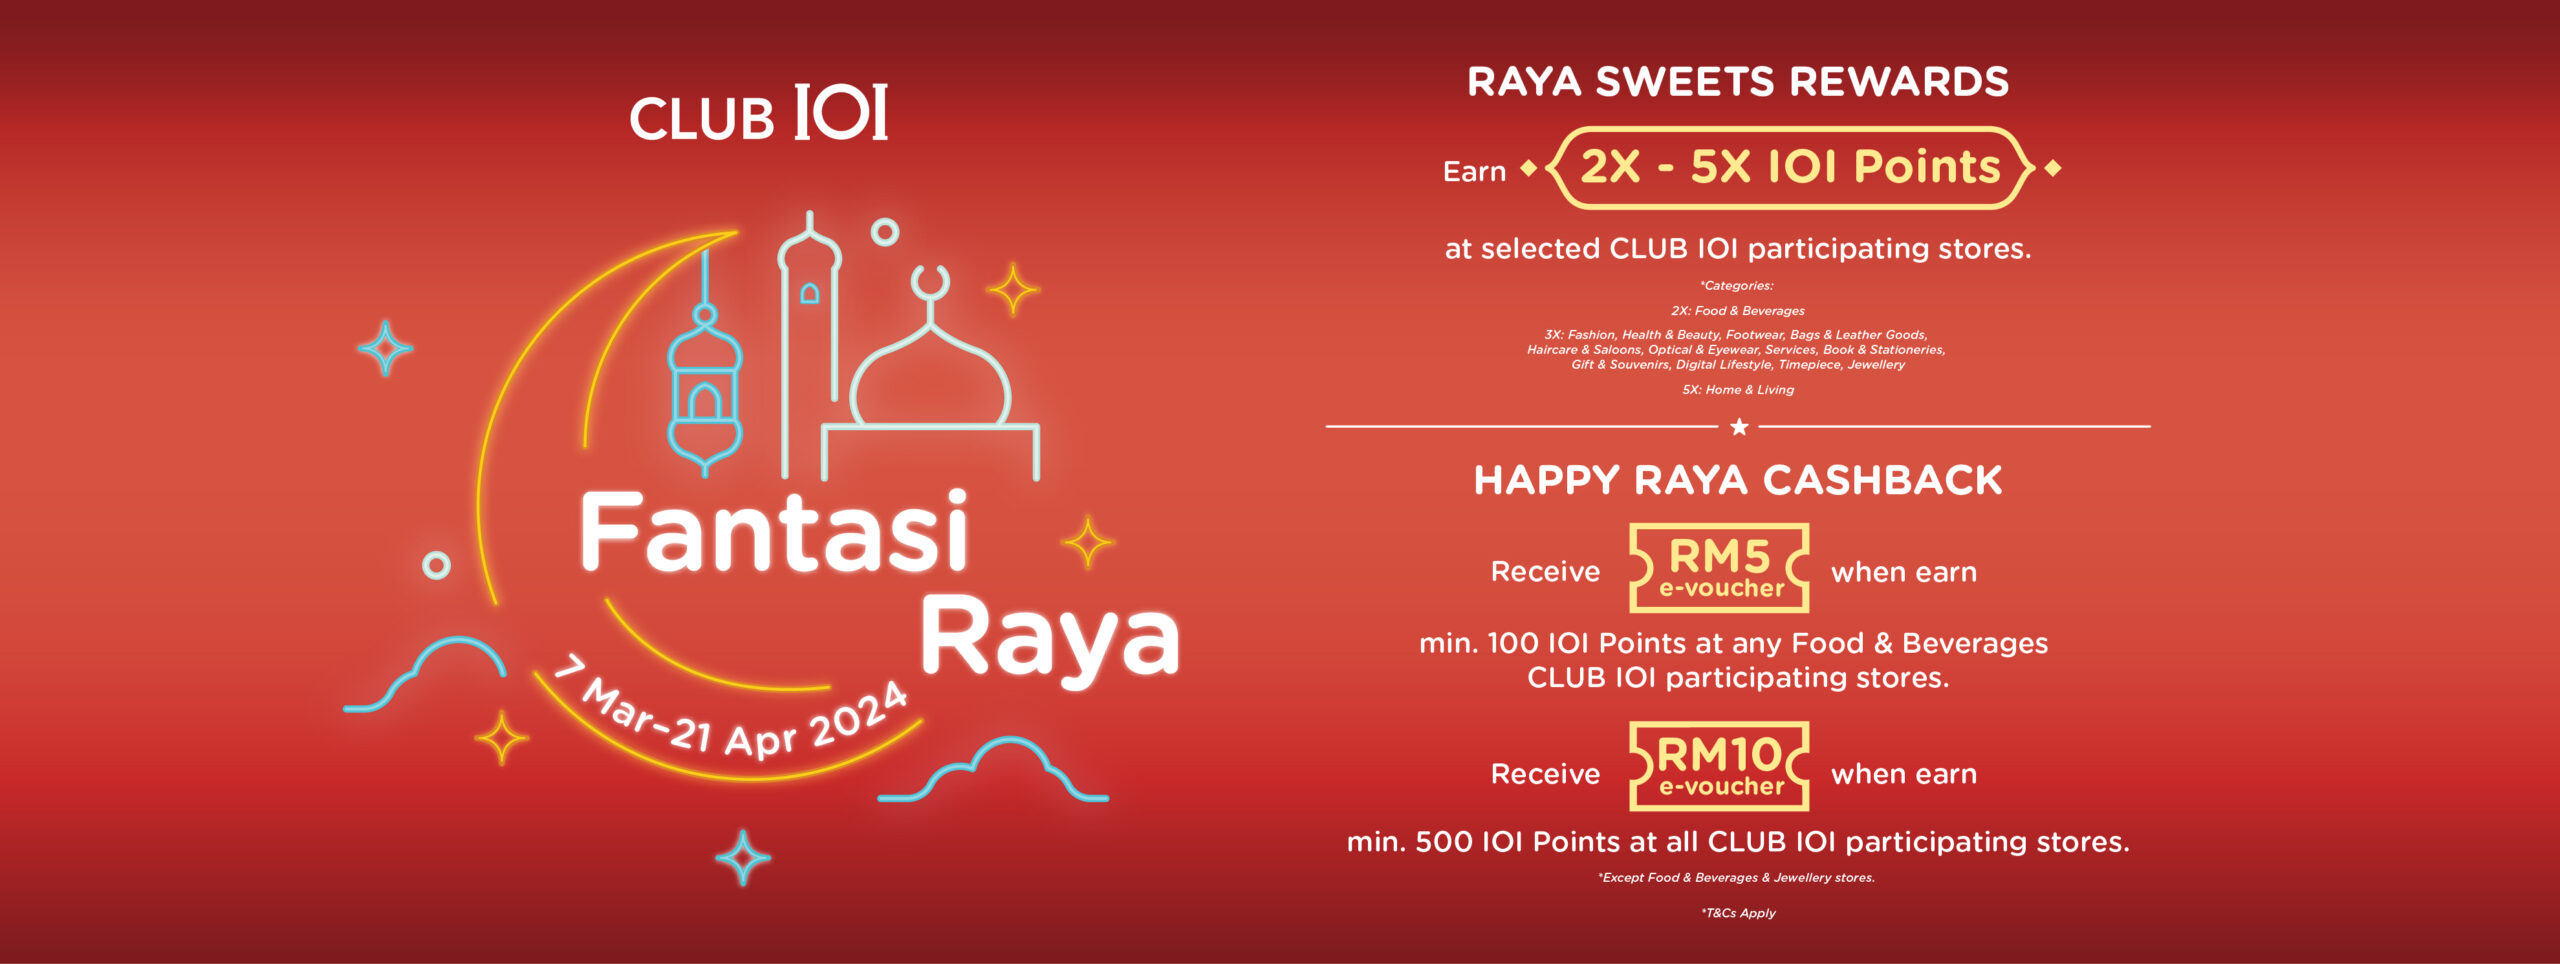 Club IOI Fantasi Raya Campaign Website Banner_Desktop_1900p x 715p